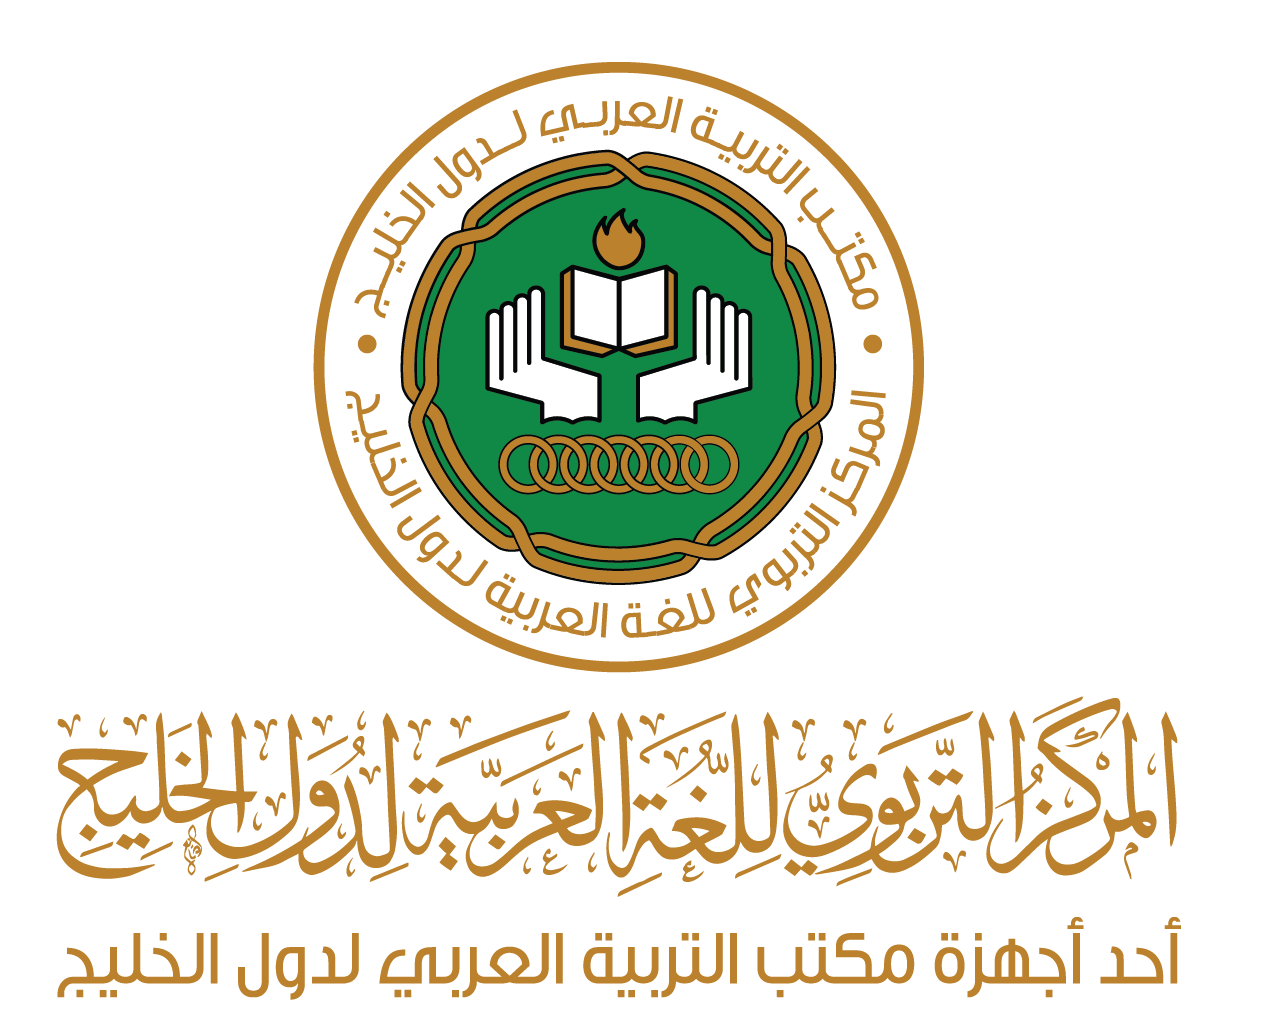 Gulf Educational Center for Arabic Studies